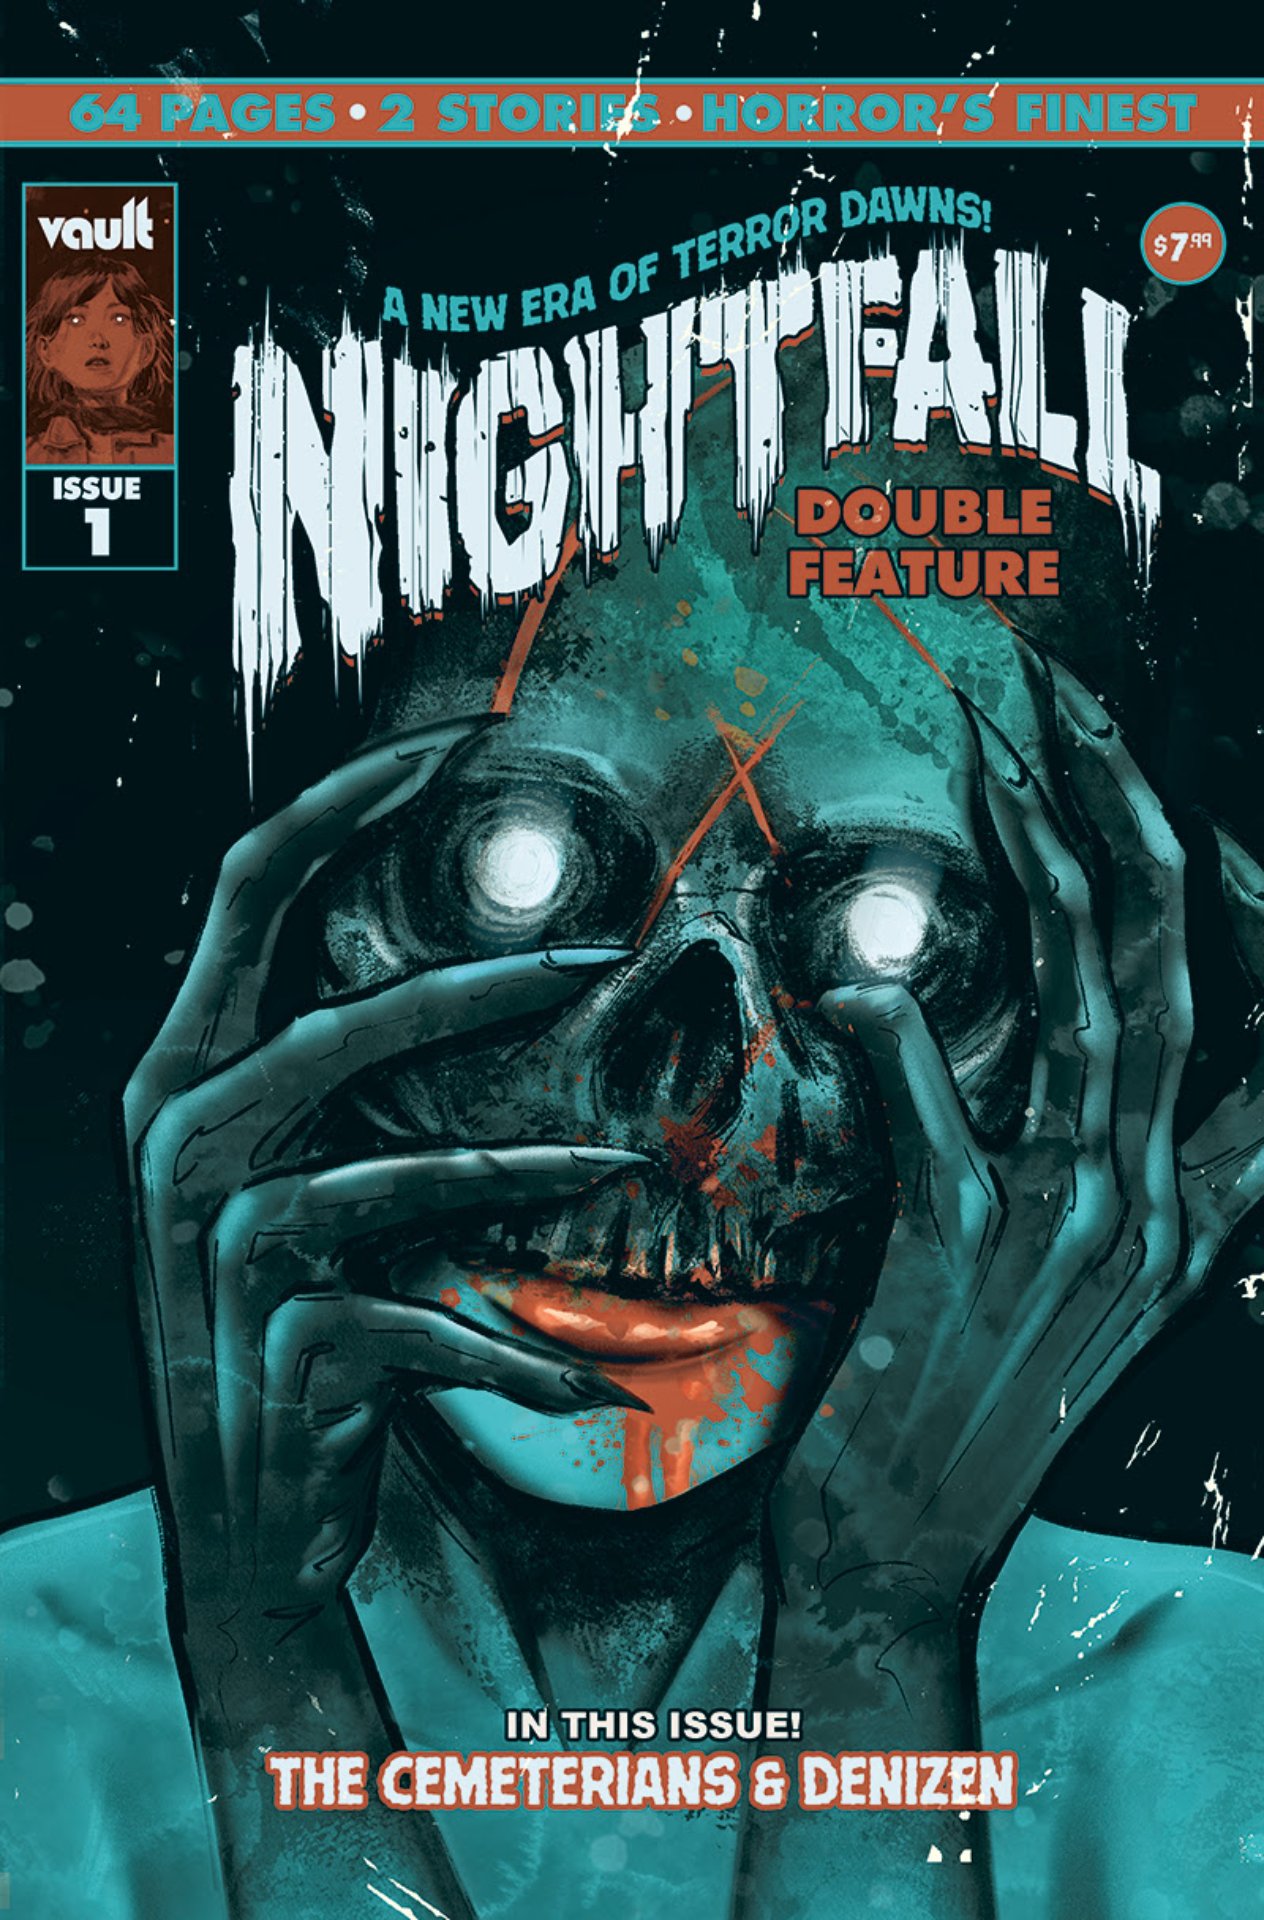 Nightfall: Double Feature #1 cover by Skylar Patridge